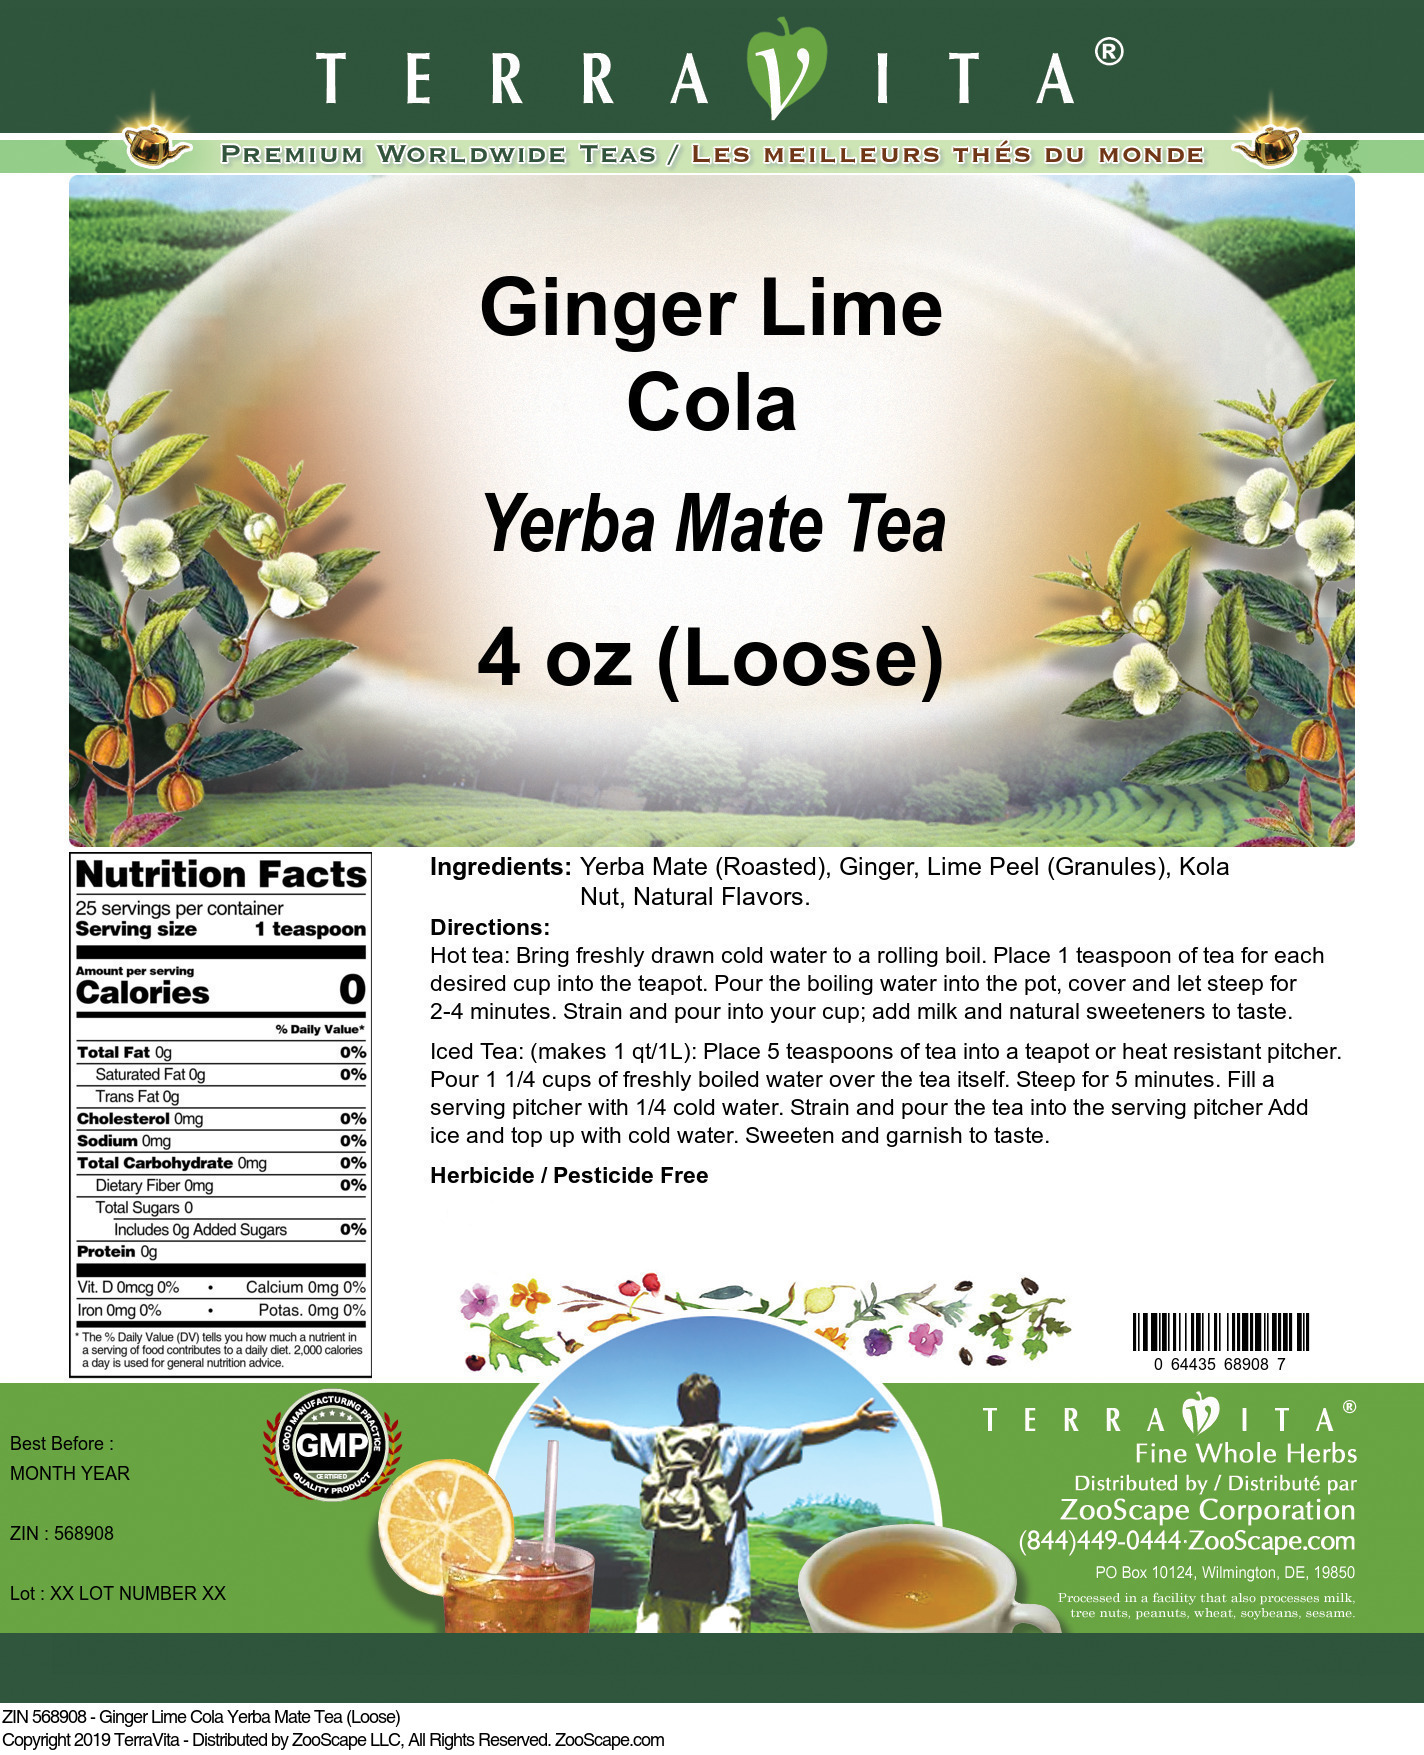 Ginger Lime Cola Yerba Mate Tea (Loose) - Label